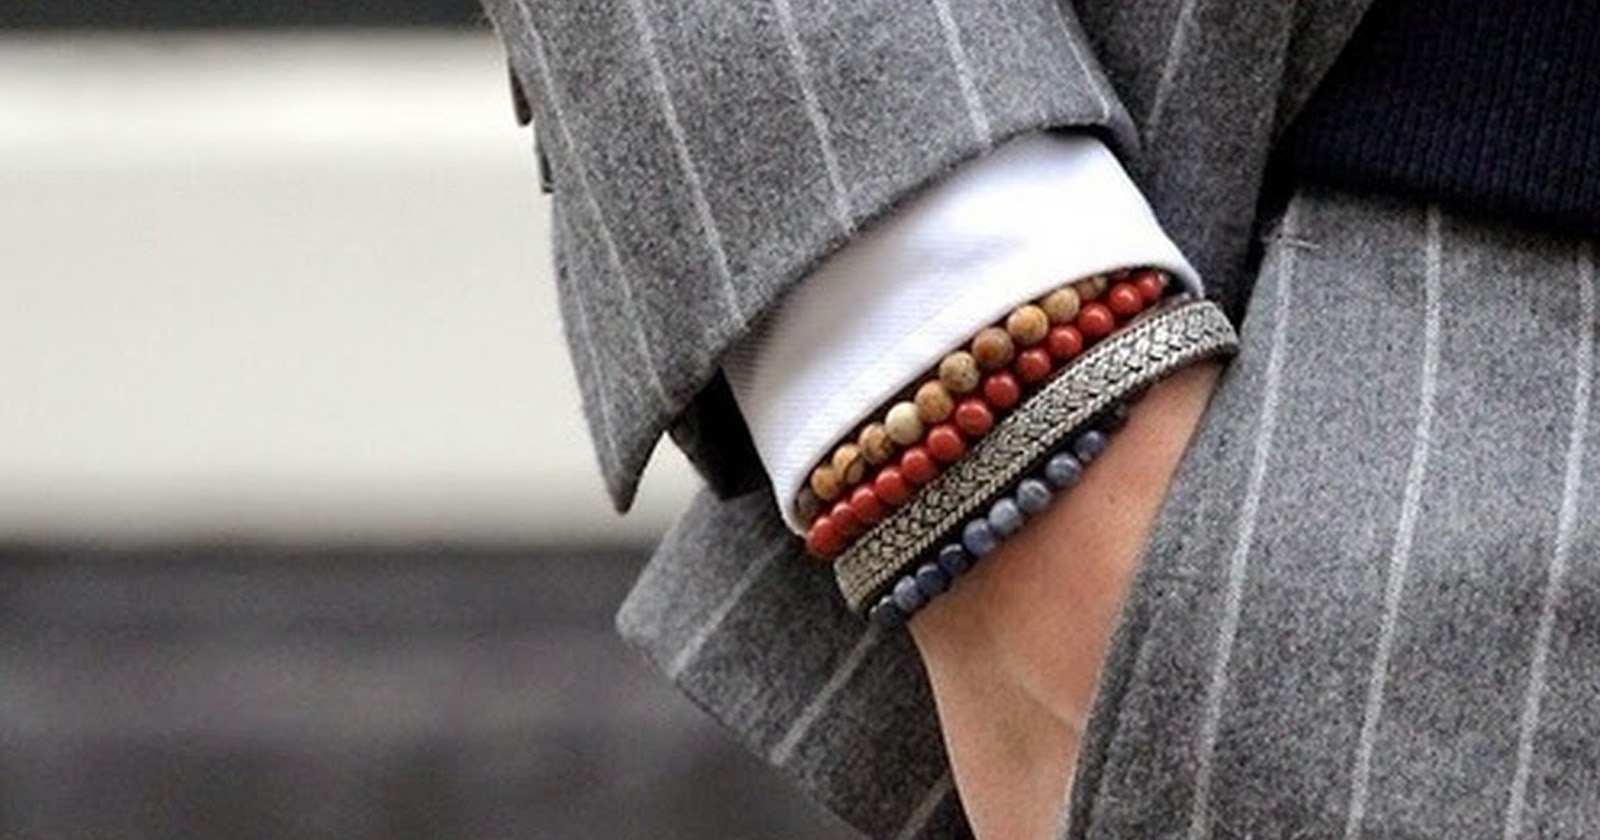 Dior Double Wrap Charm Leather Bracelet